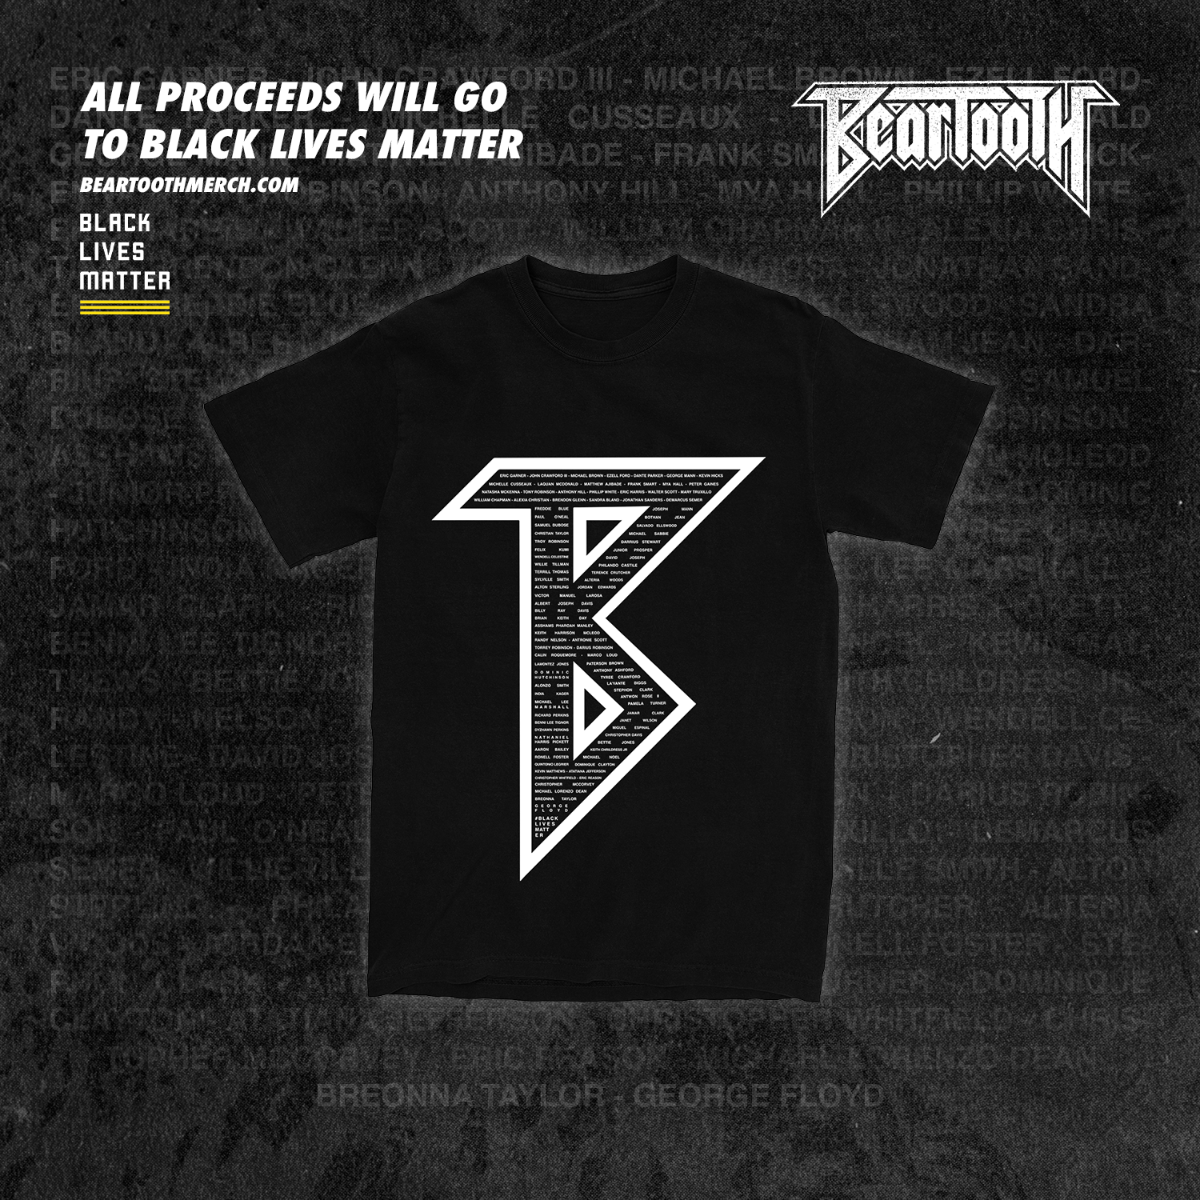 Beartooth Release Black Lives Matter T-Shirt, 100% Of Net Proceeds Donated